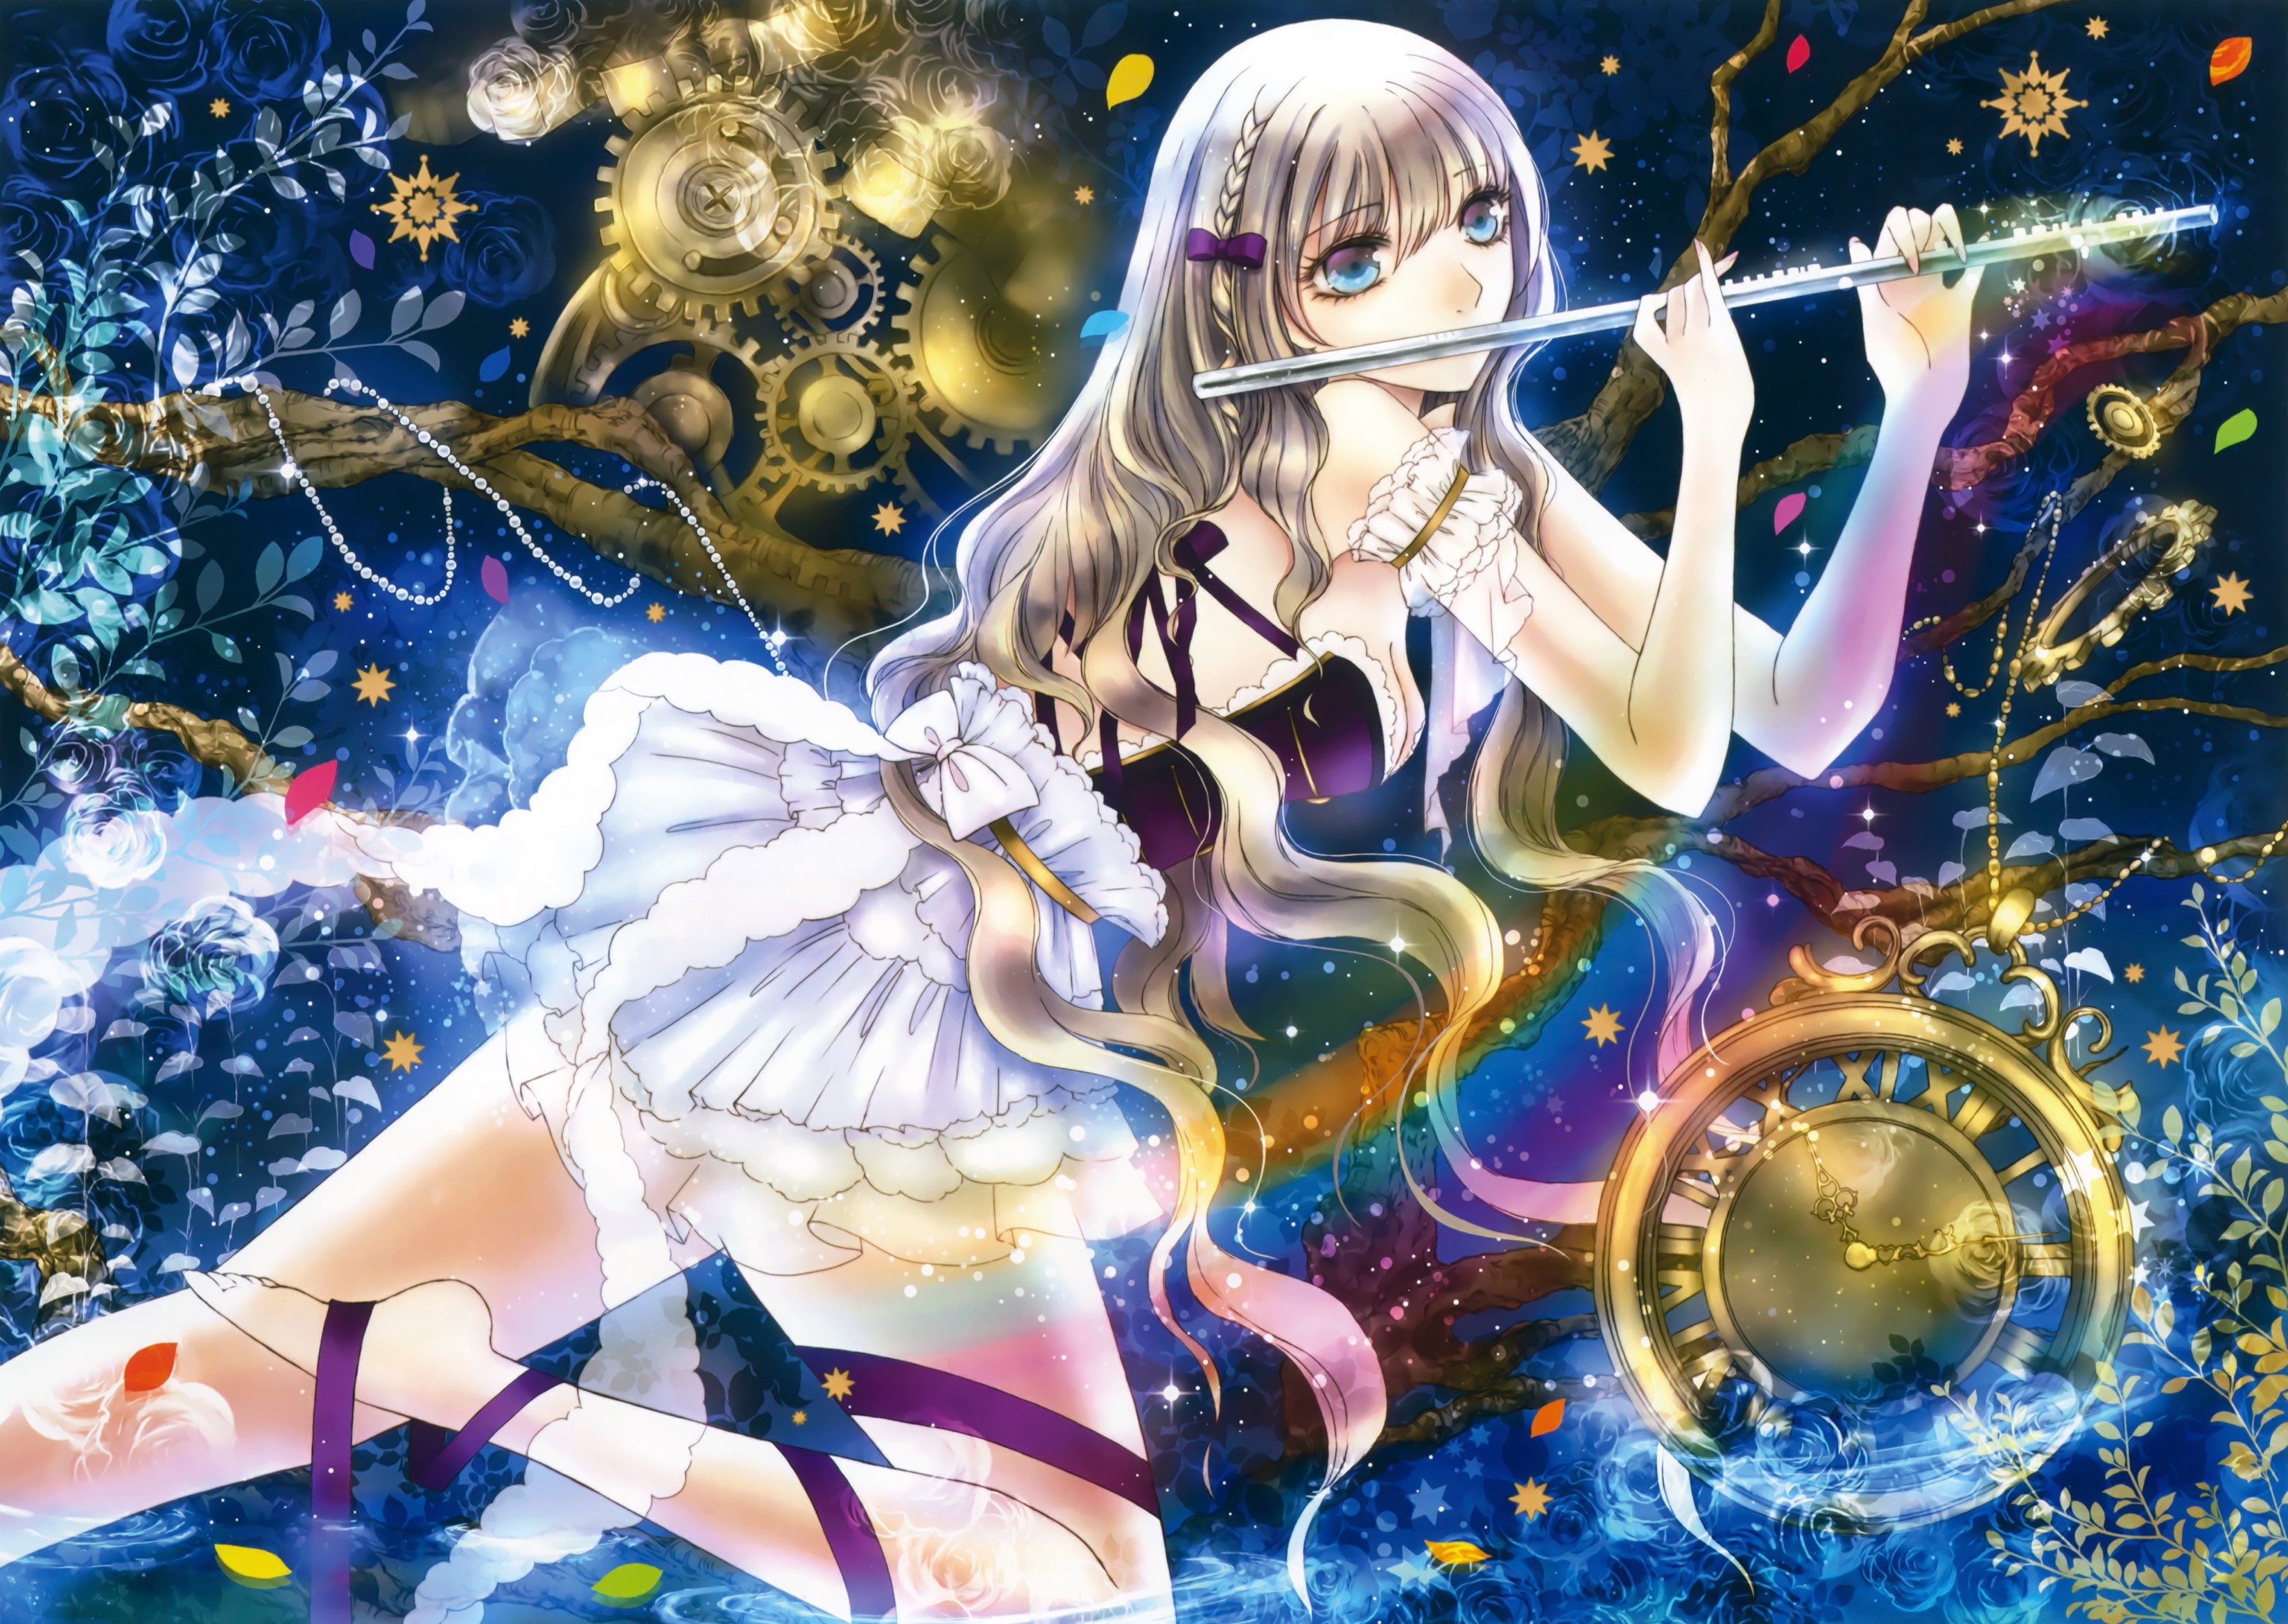 Anime 3300x2343 anime anime girls flute long hair feet music musical instrument fantasy art fantasy girl thighs legs aqua eyes dress clocks Gear Wheels